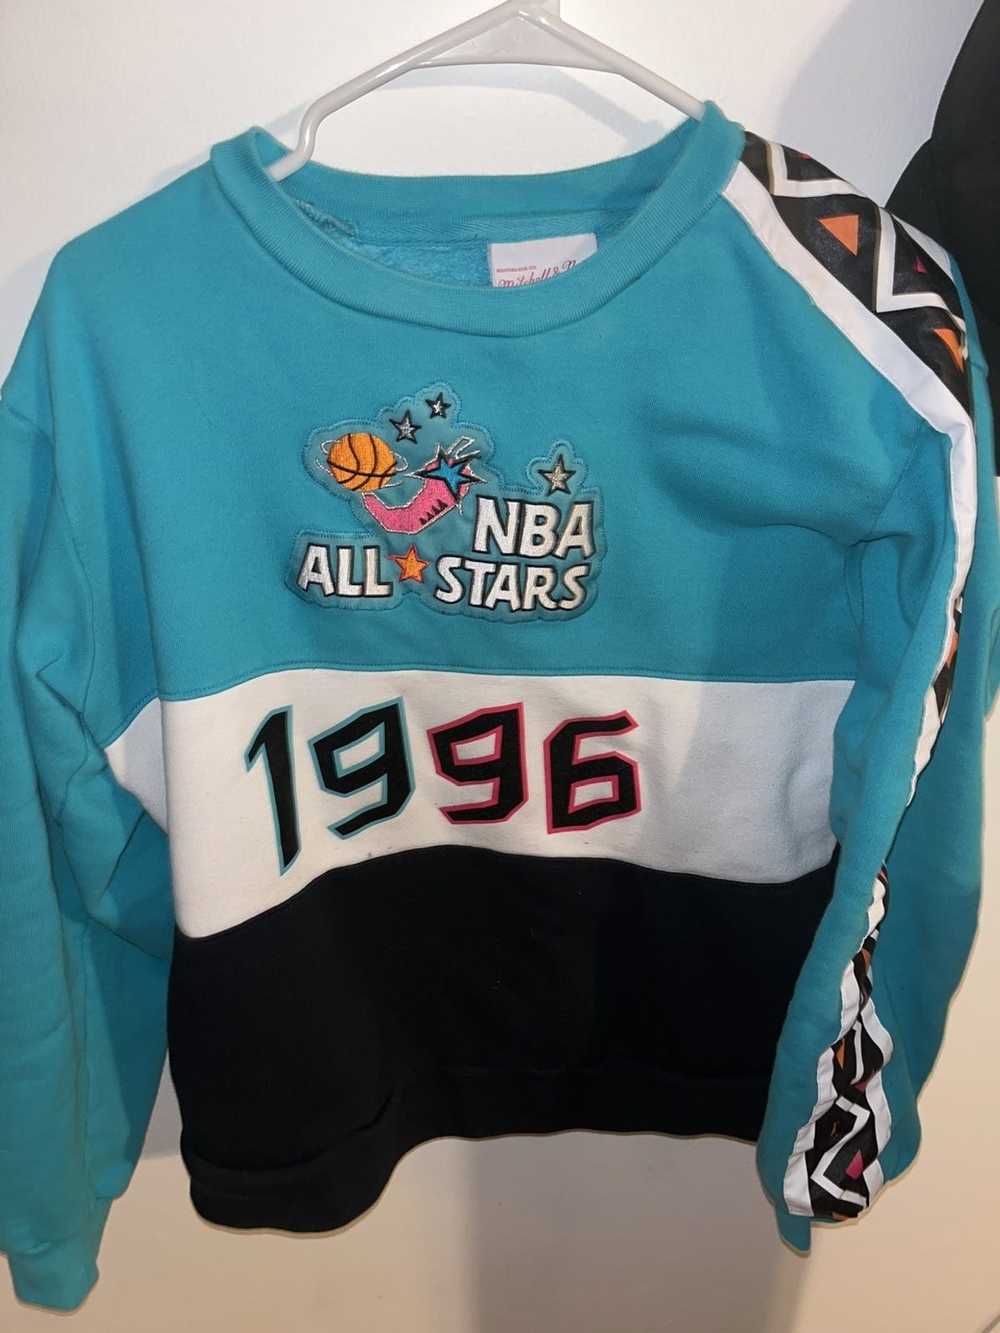 NBA Vintage 1996 all star weekend NBC cap . Z z z . - Depop